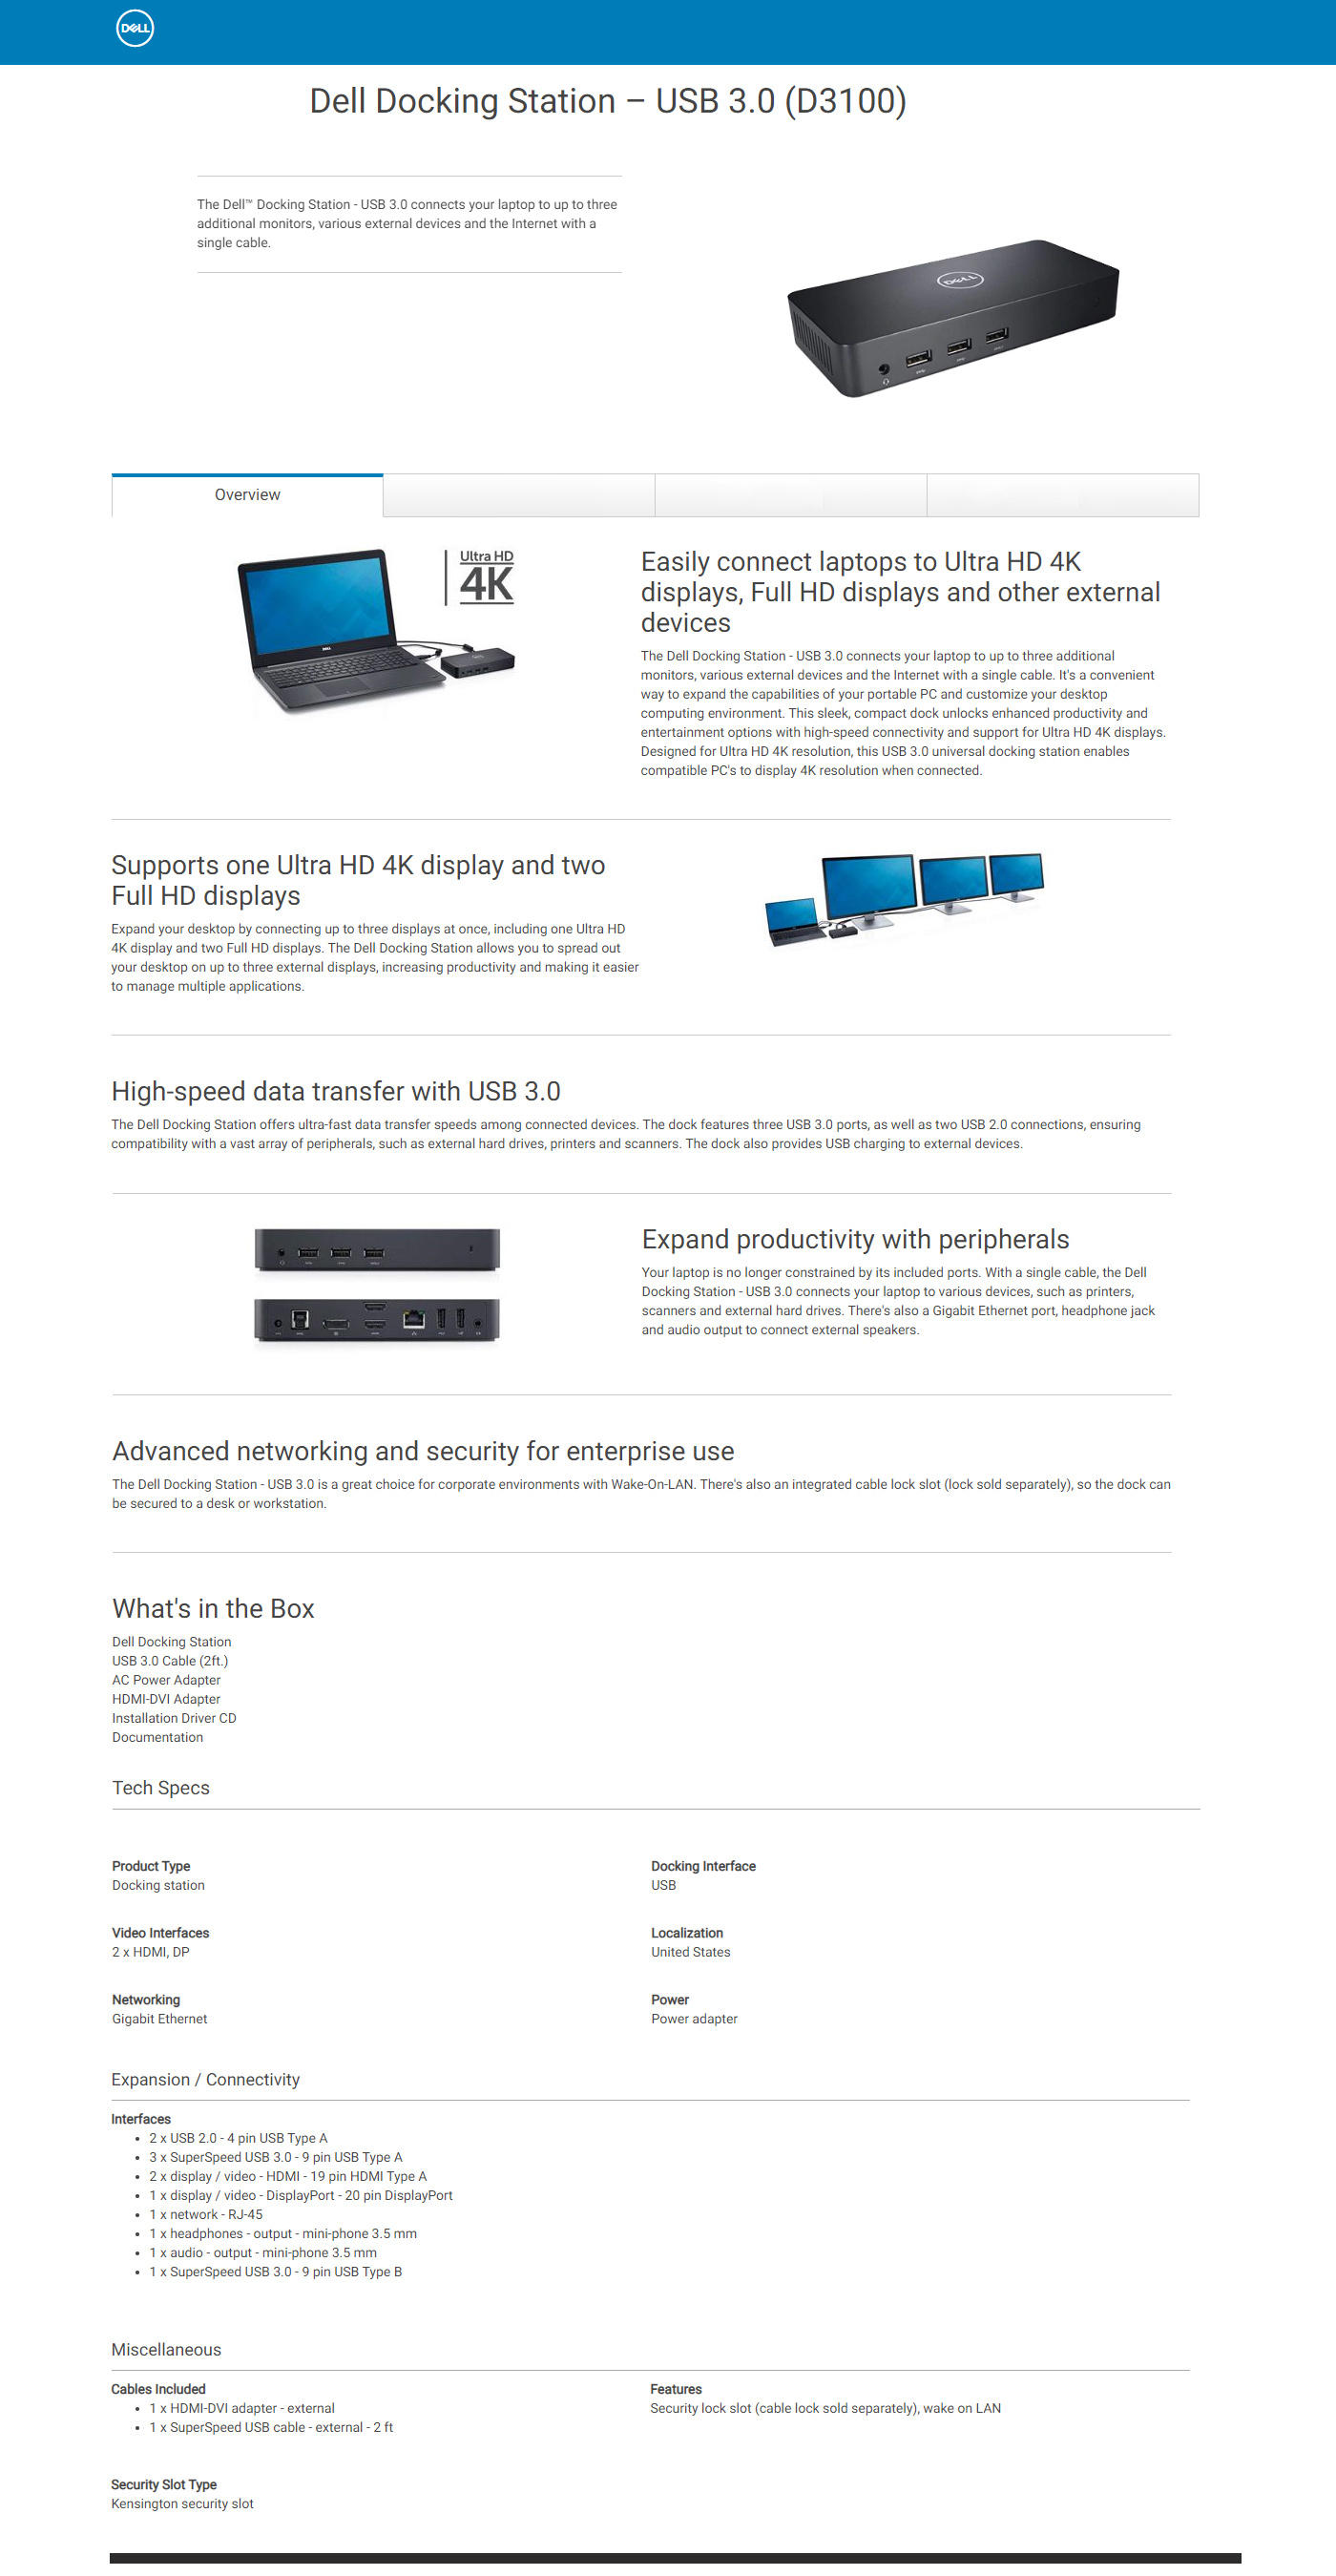 Buy Online Dell USB 3.0 Ultra HD Docking Station - D3100 (452-11718)